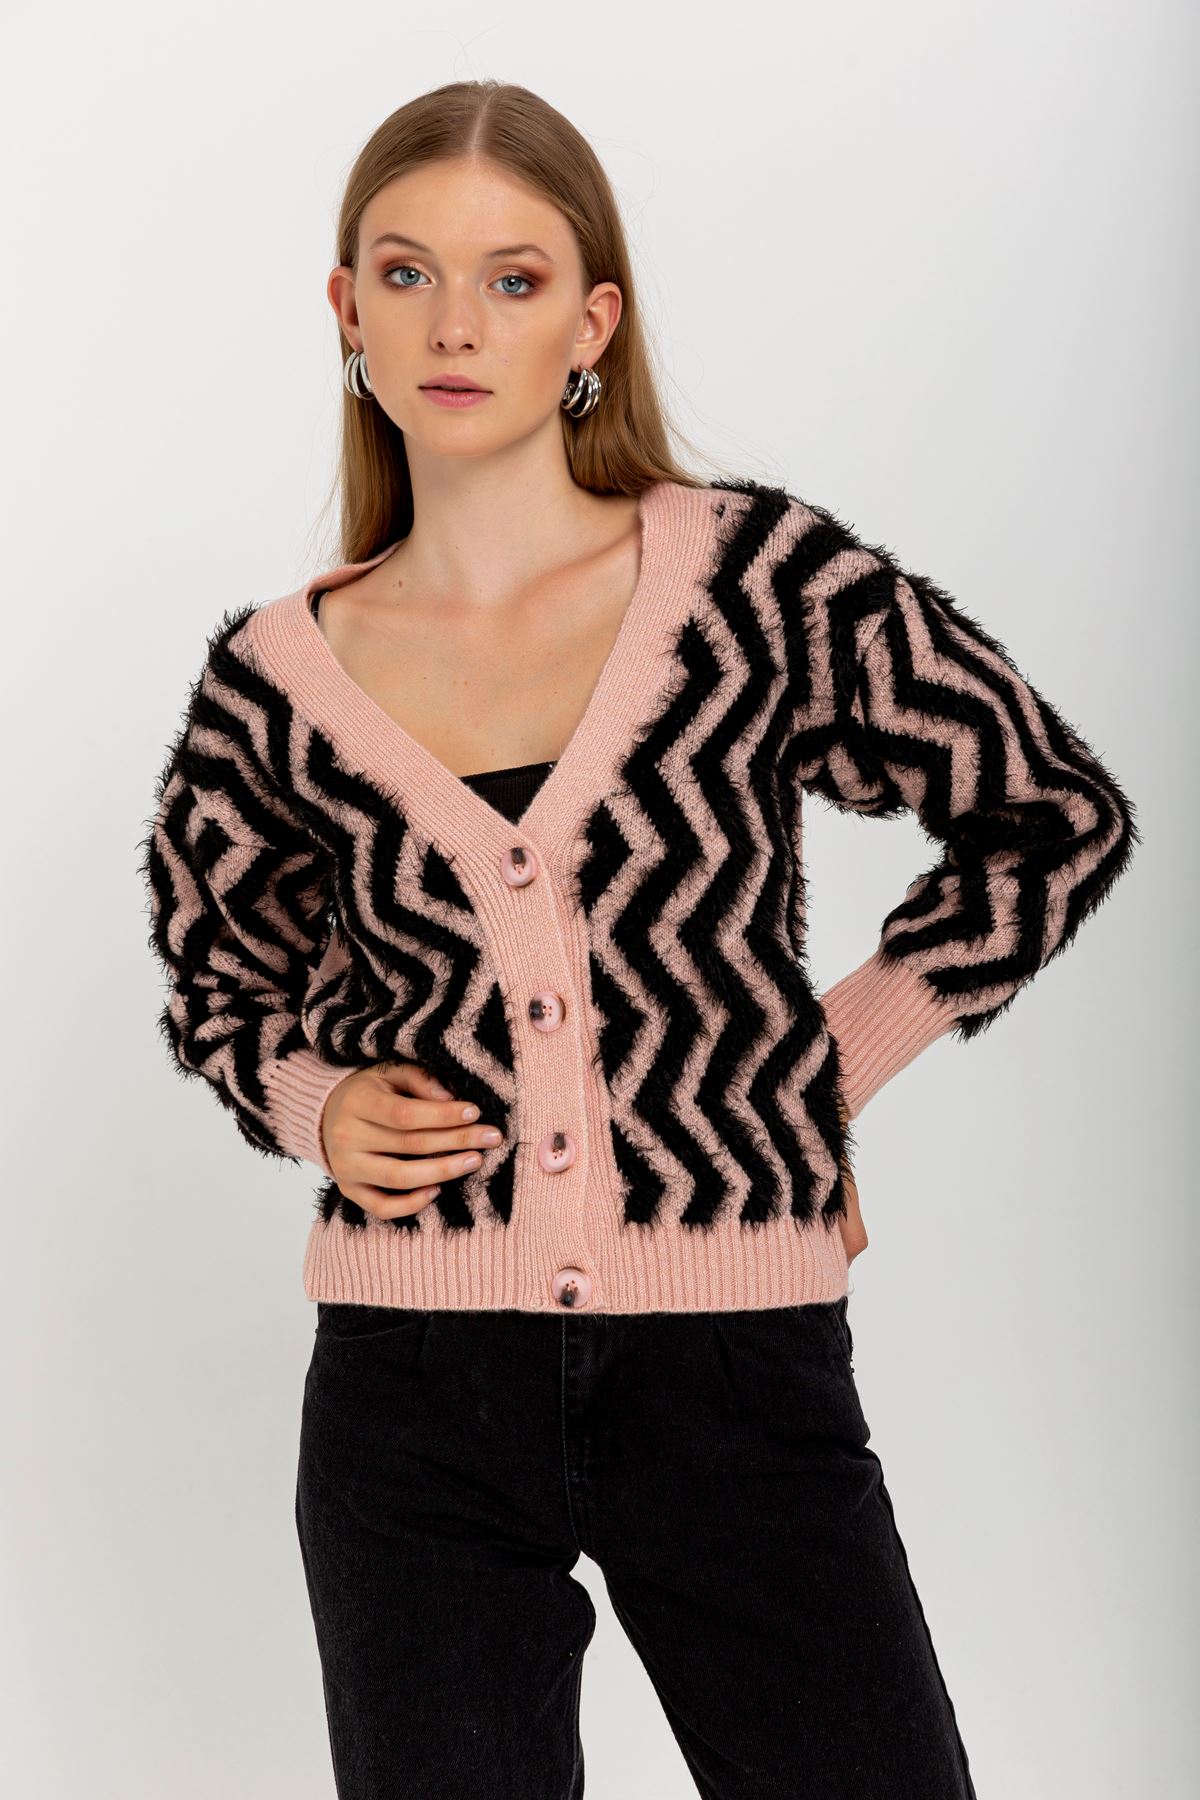 Knitwear Fabric Long Sleeve V-Neck Short Fringed Women Cardigan - Light Pink